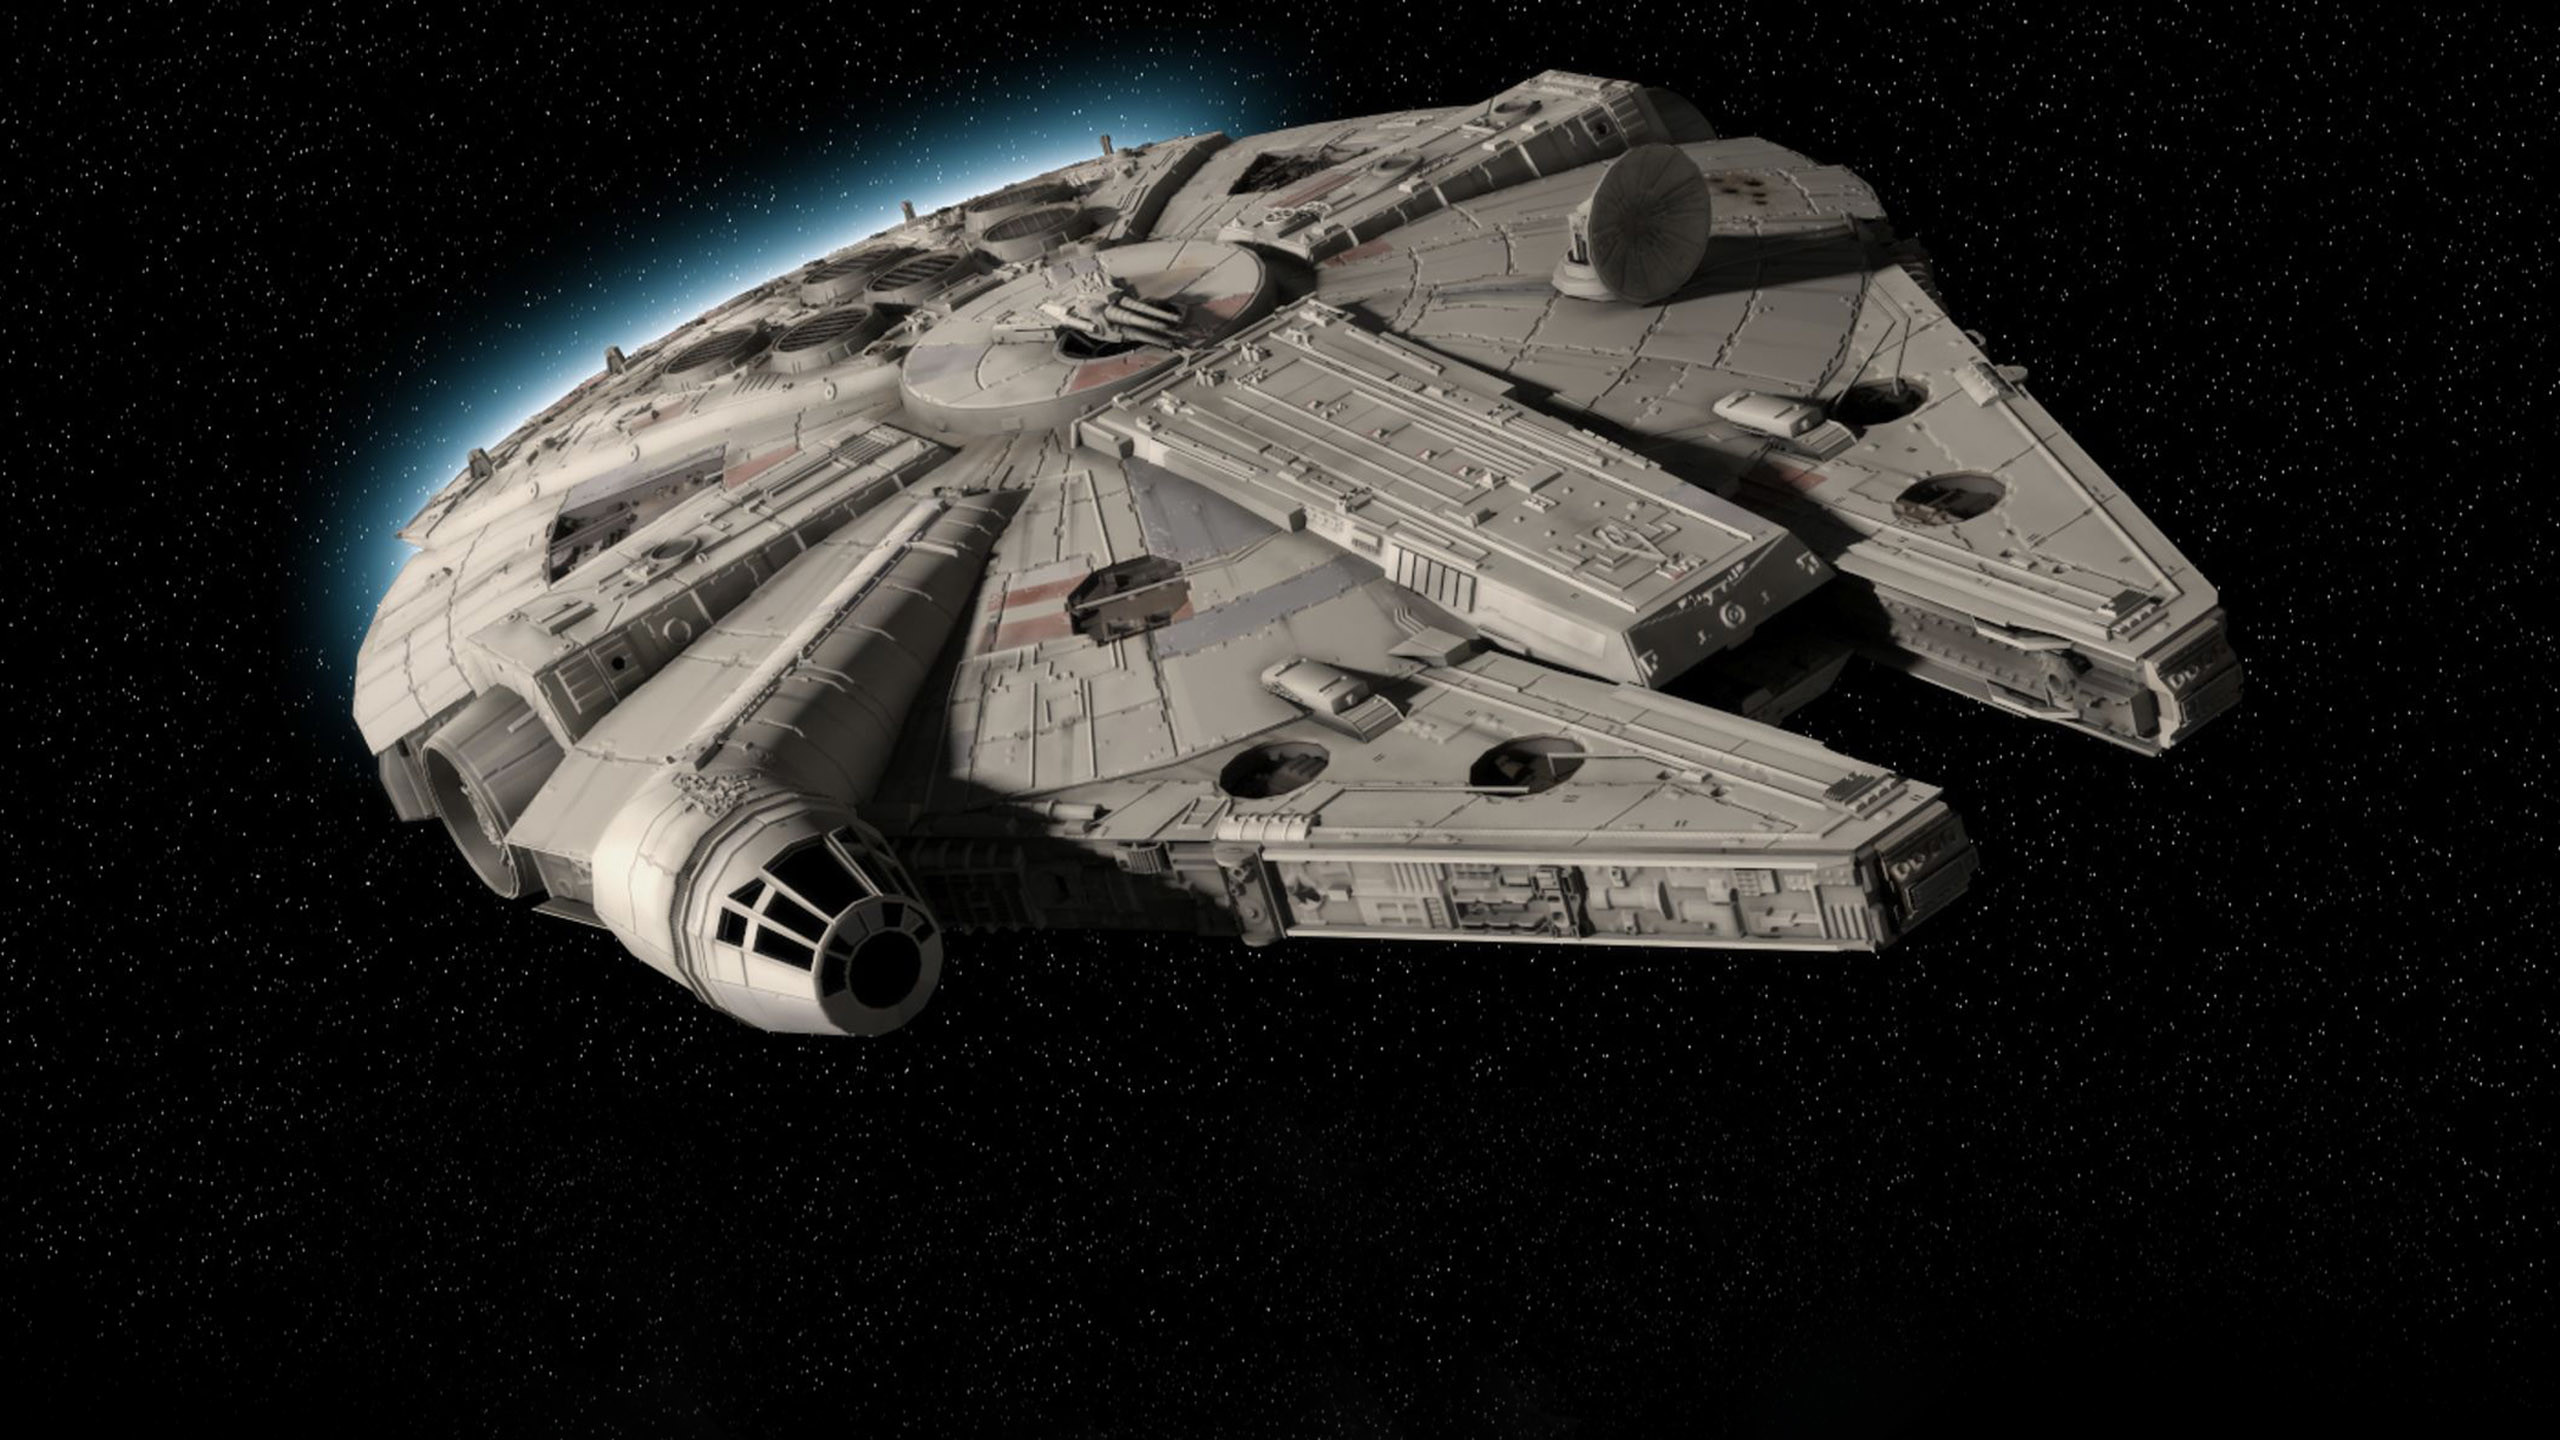 Star Wars Movies Spaceships Millenium Falcon Desktop Hd Wallpaper Wallpapers13.com